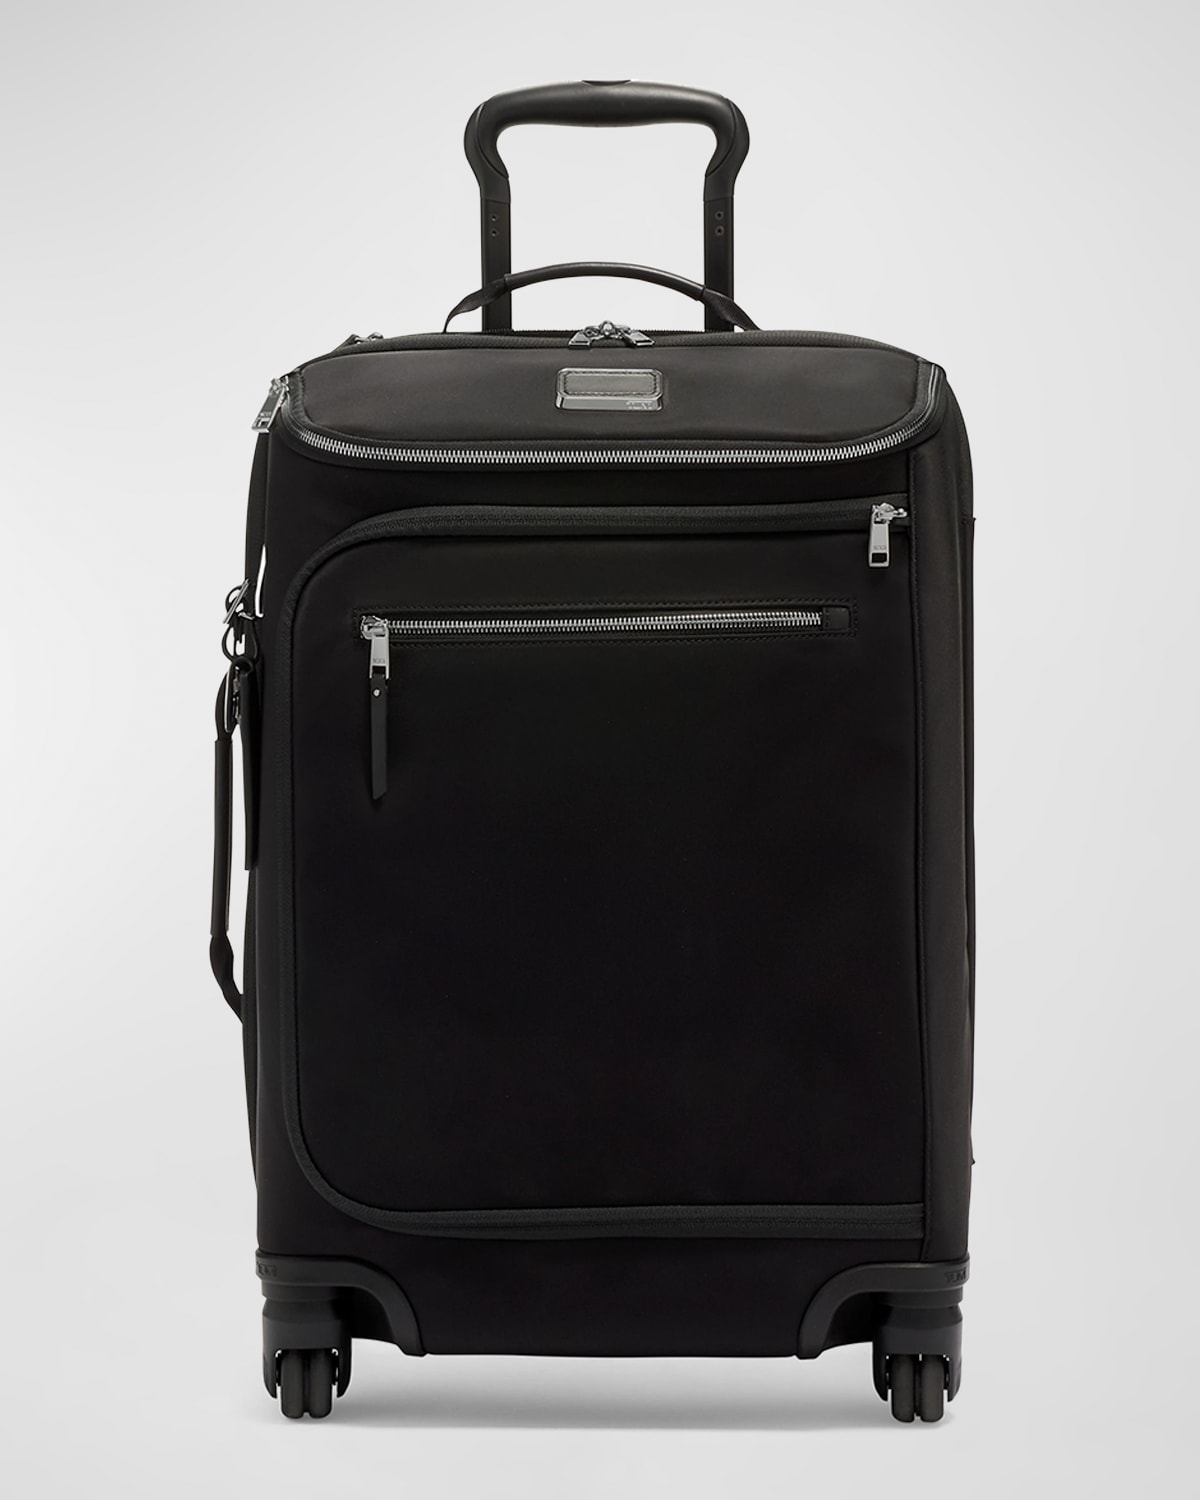 Tumi Leger International Carry-on Luggage In Black/gunmetal